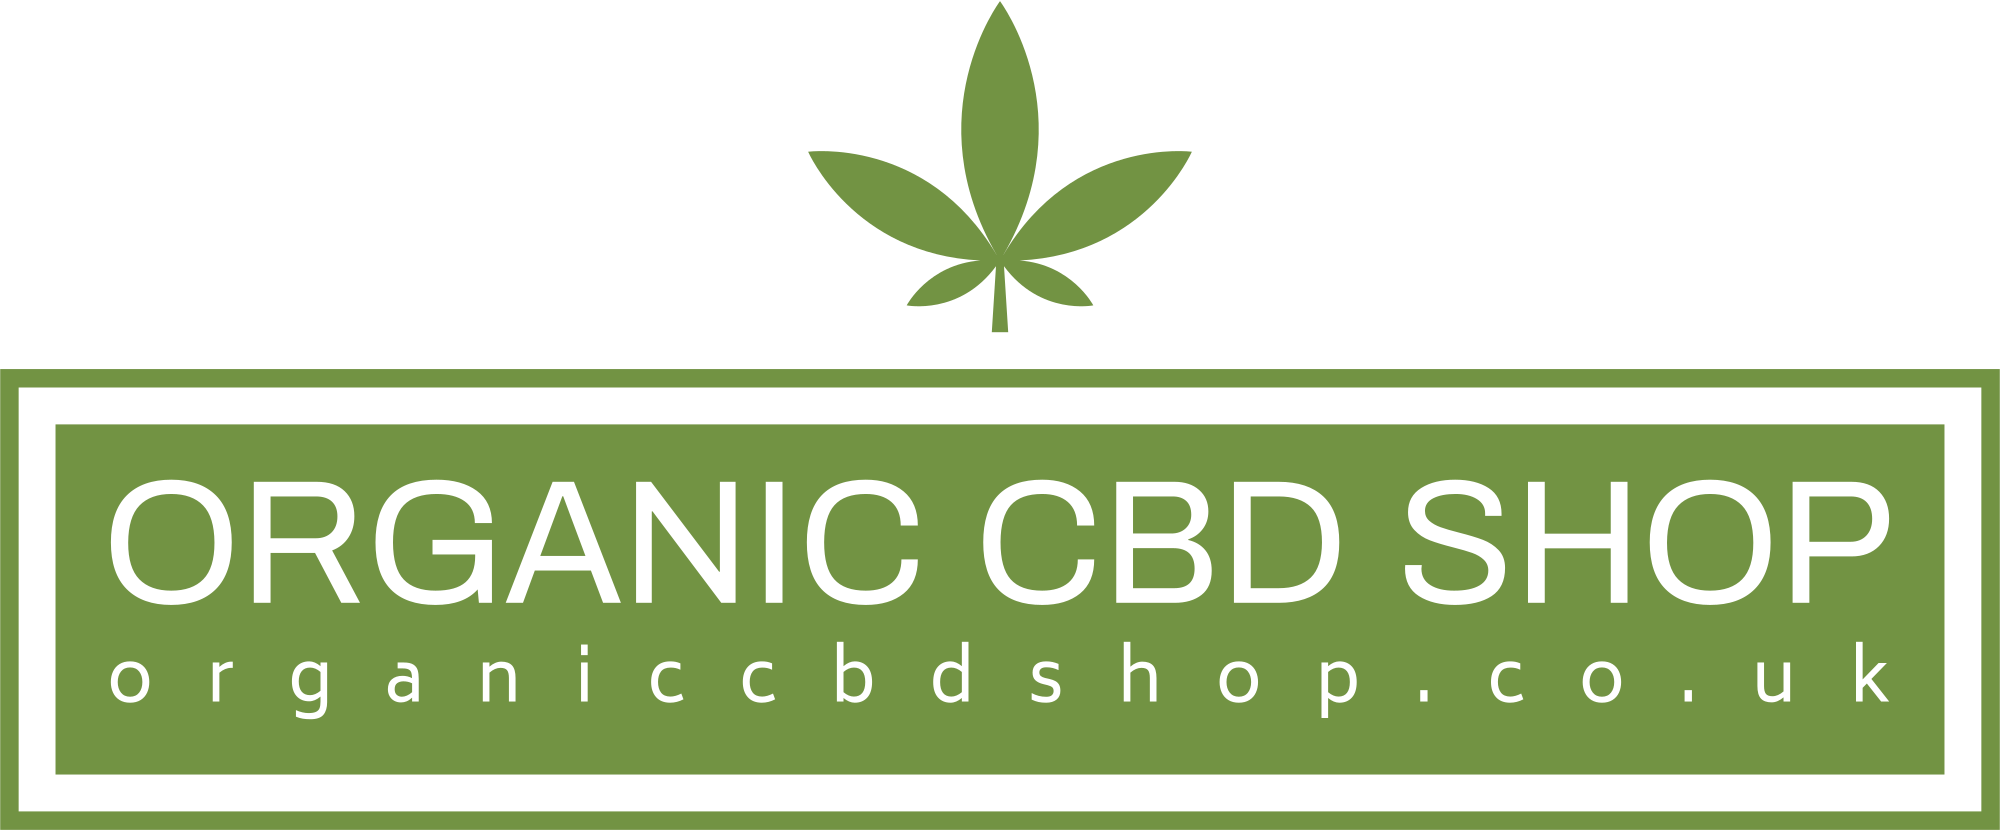 organic-cbd-shop-high-resolution-logo-color-on-transparent-background